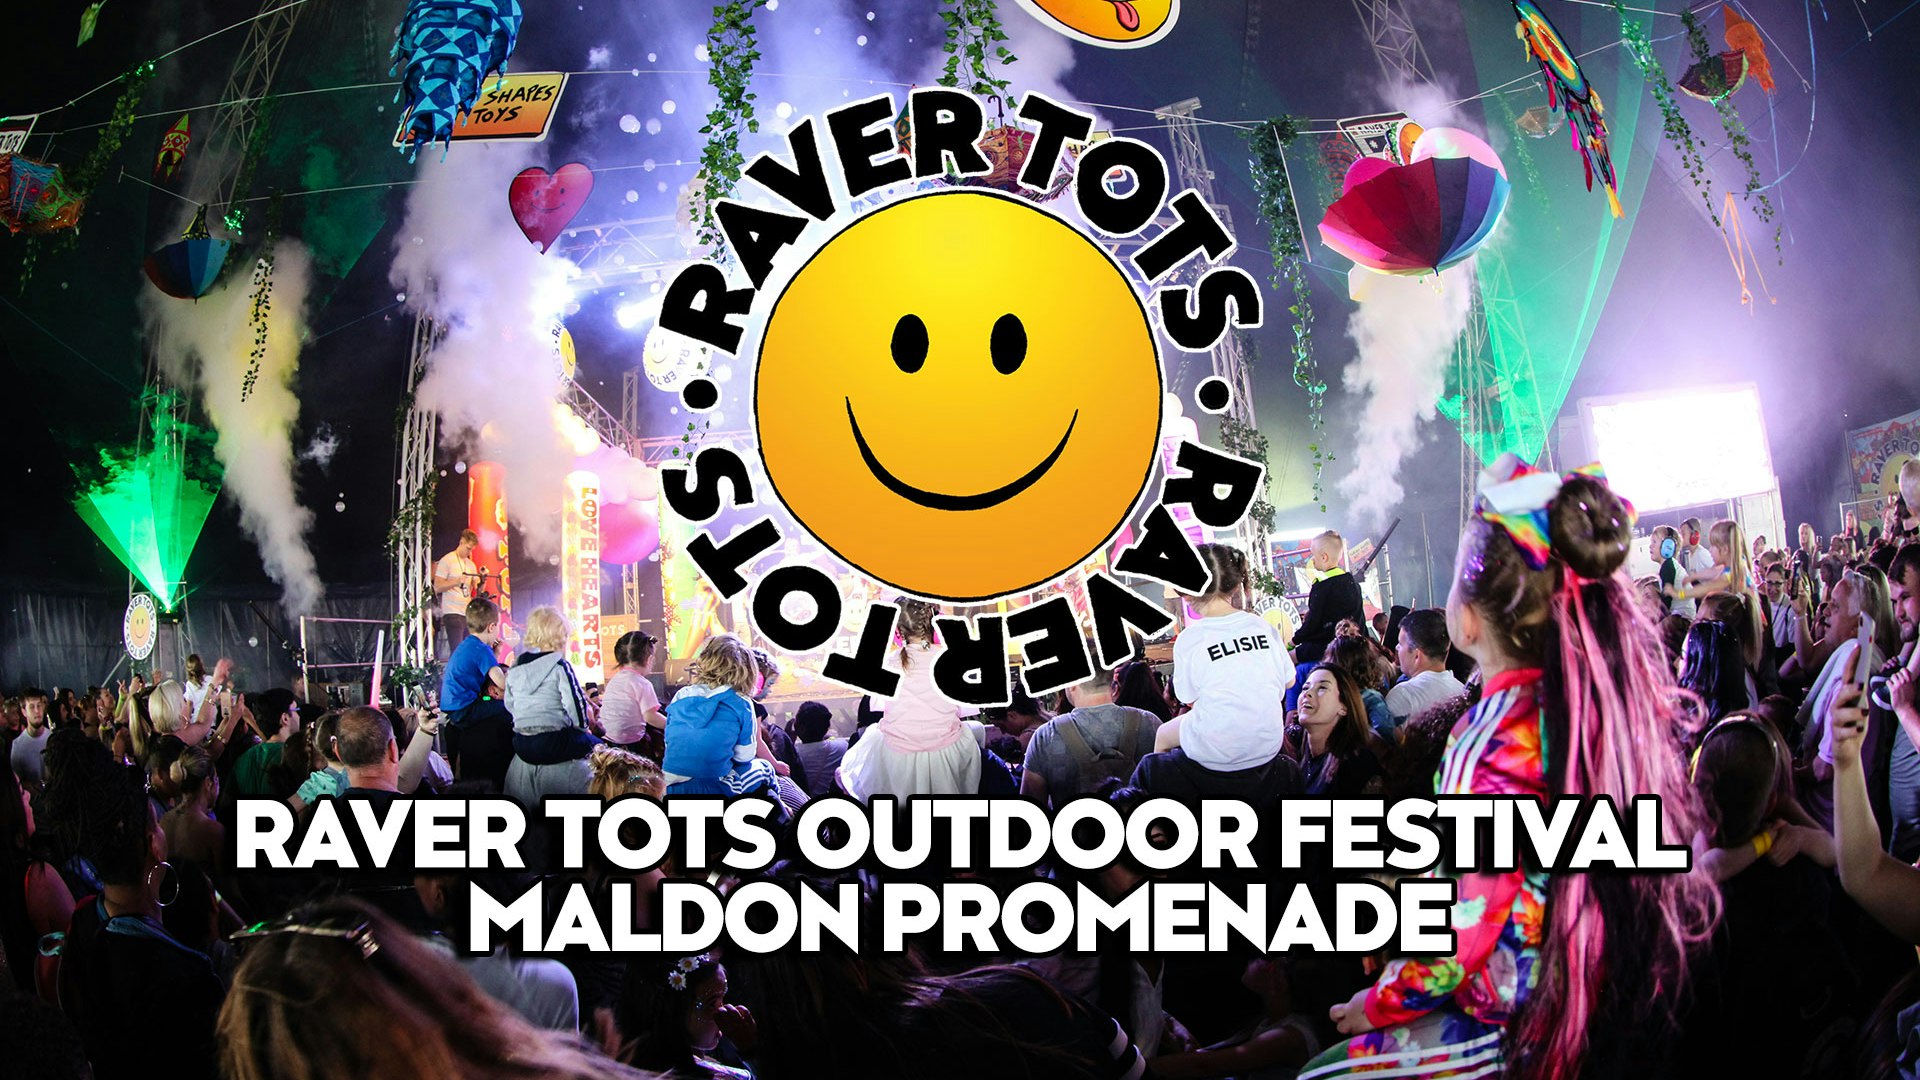 The Worlds Biggest Ever Raver Tots Outdoor Festival – Maldon Promenade